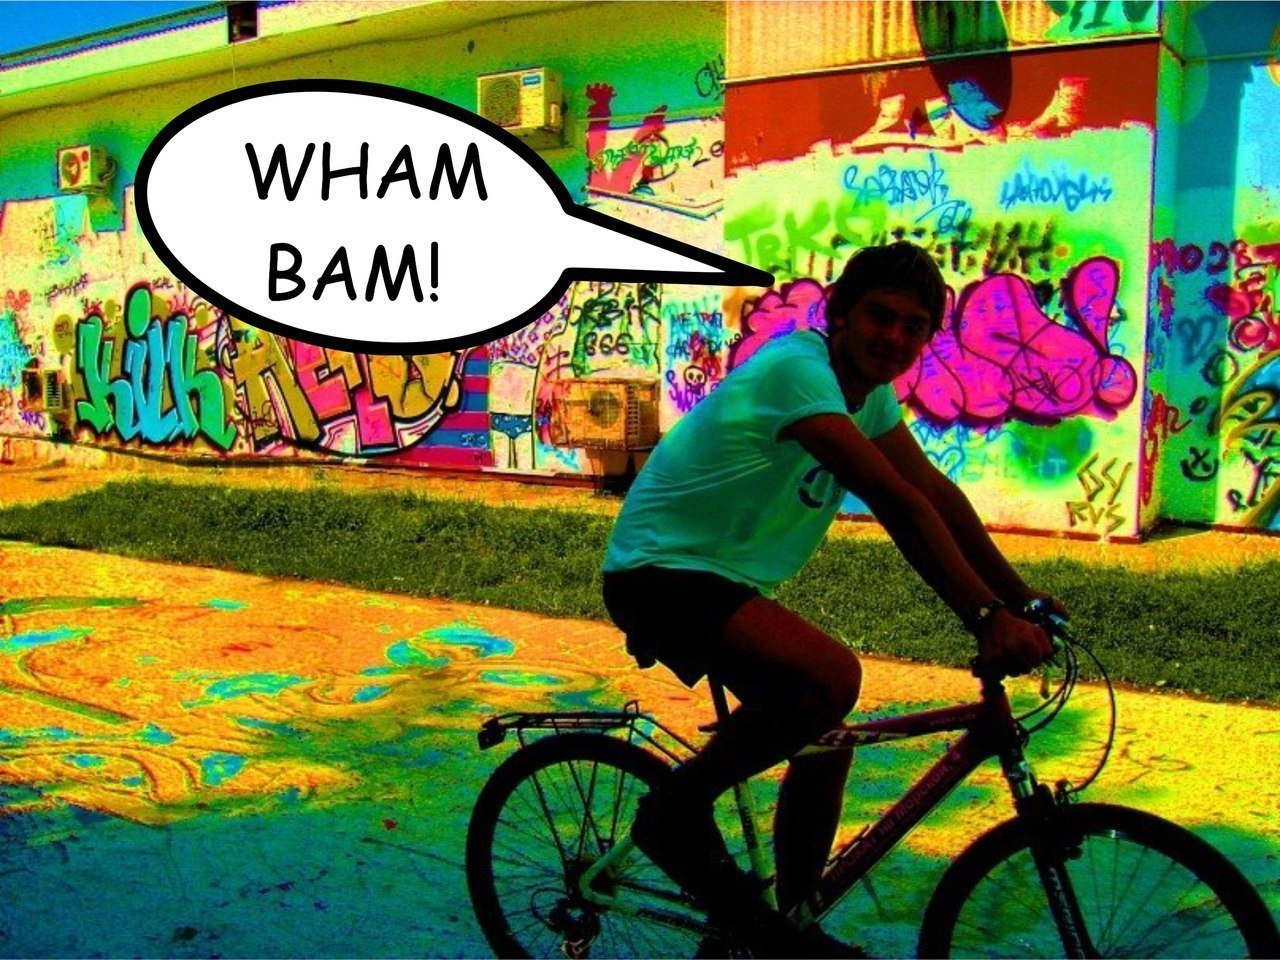 Wham bam. Фото Bam Wham на печать. Vam Bam ВК. Van Basten Wham Bam. Wham Bam thank you Spaceman.